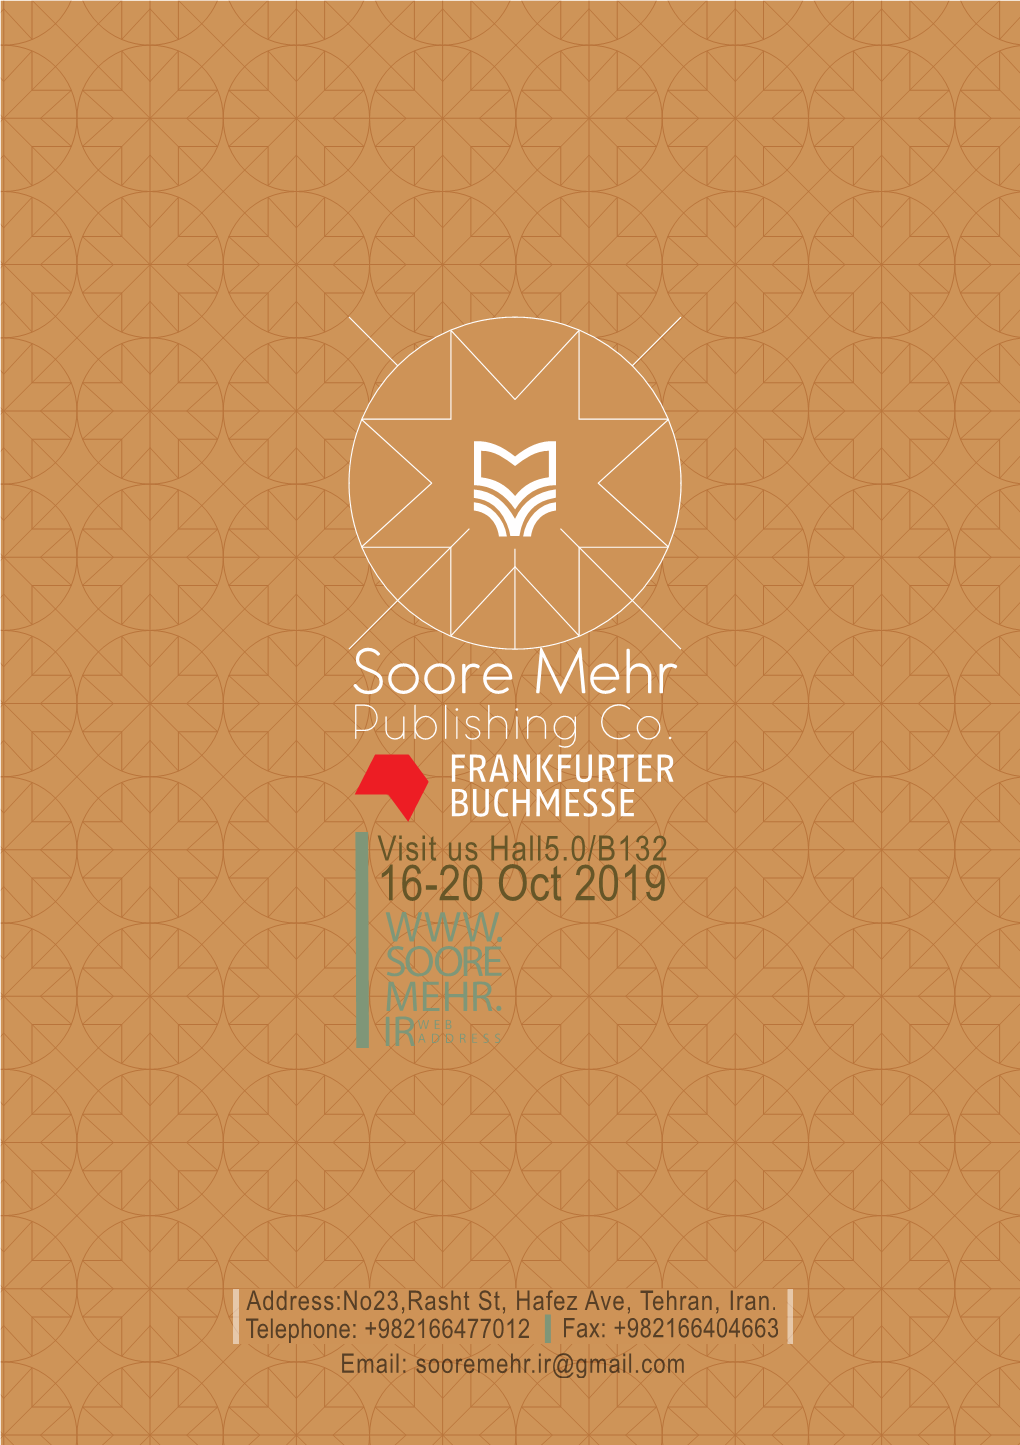 Soore Mehr Publishing Co